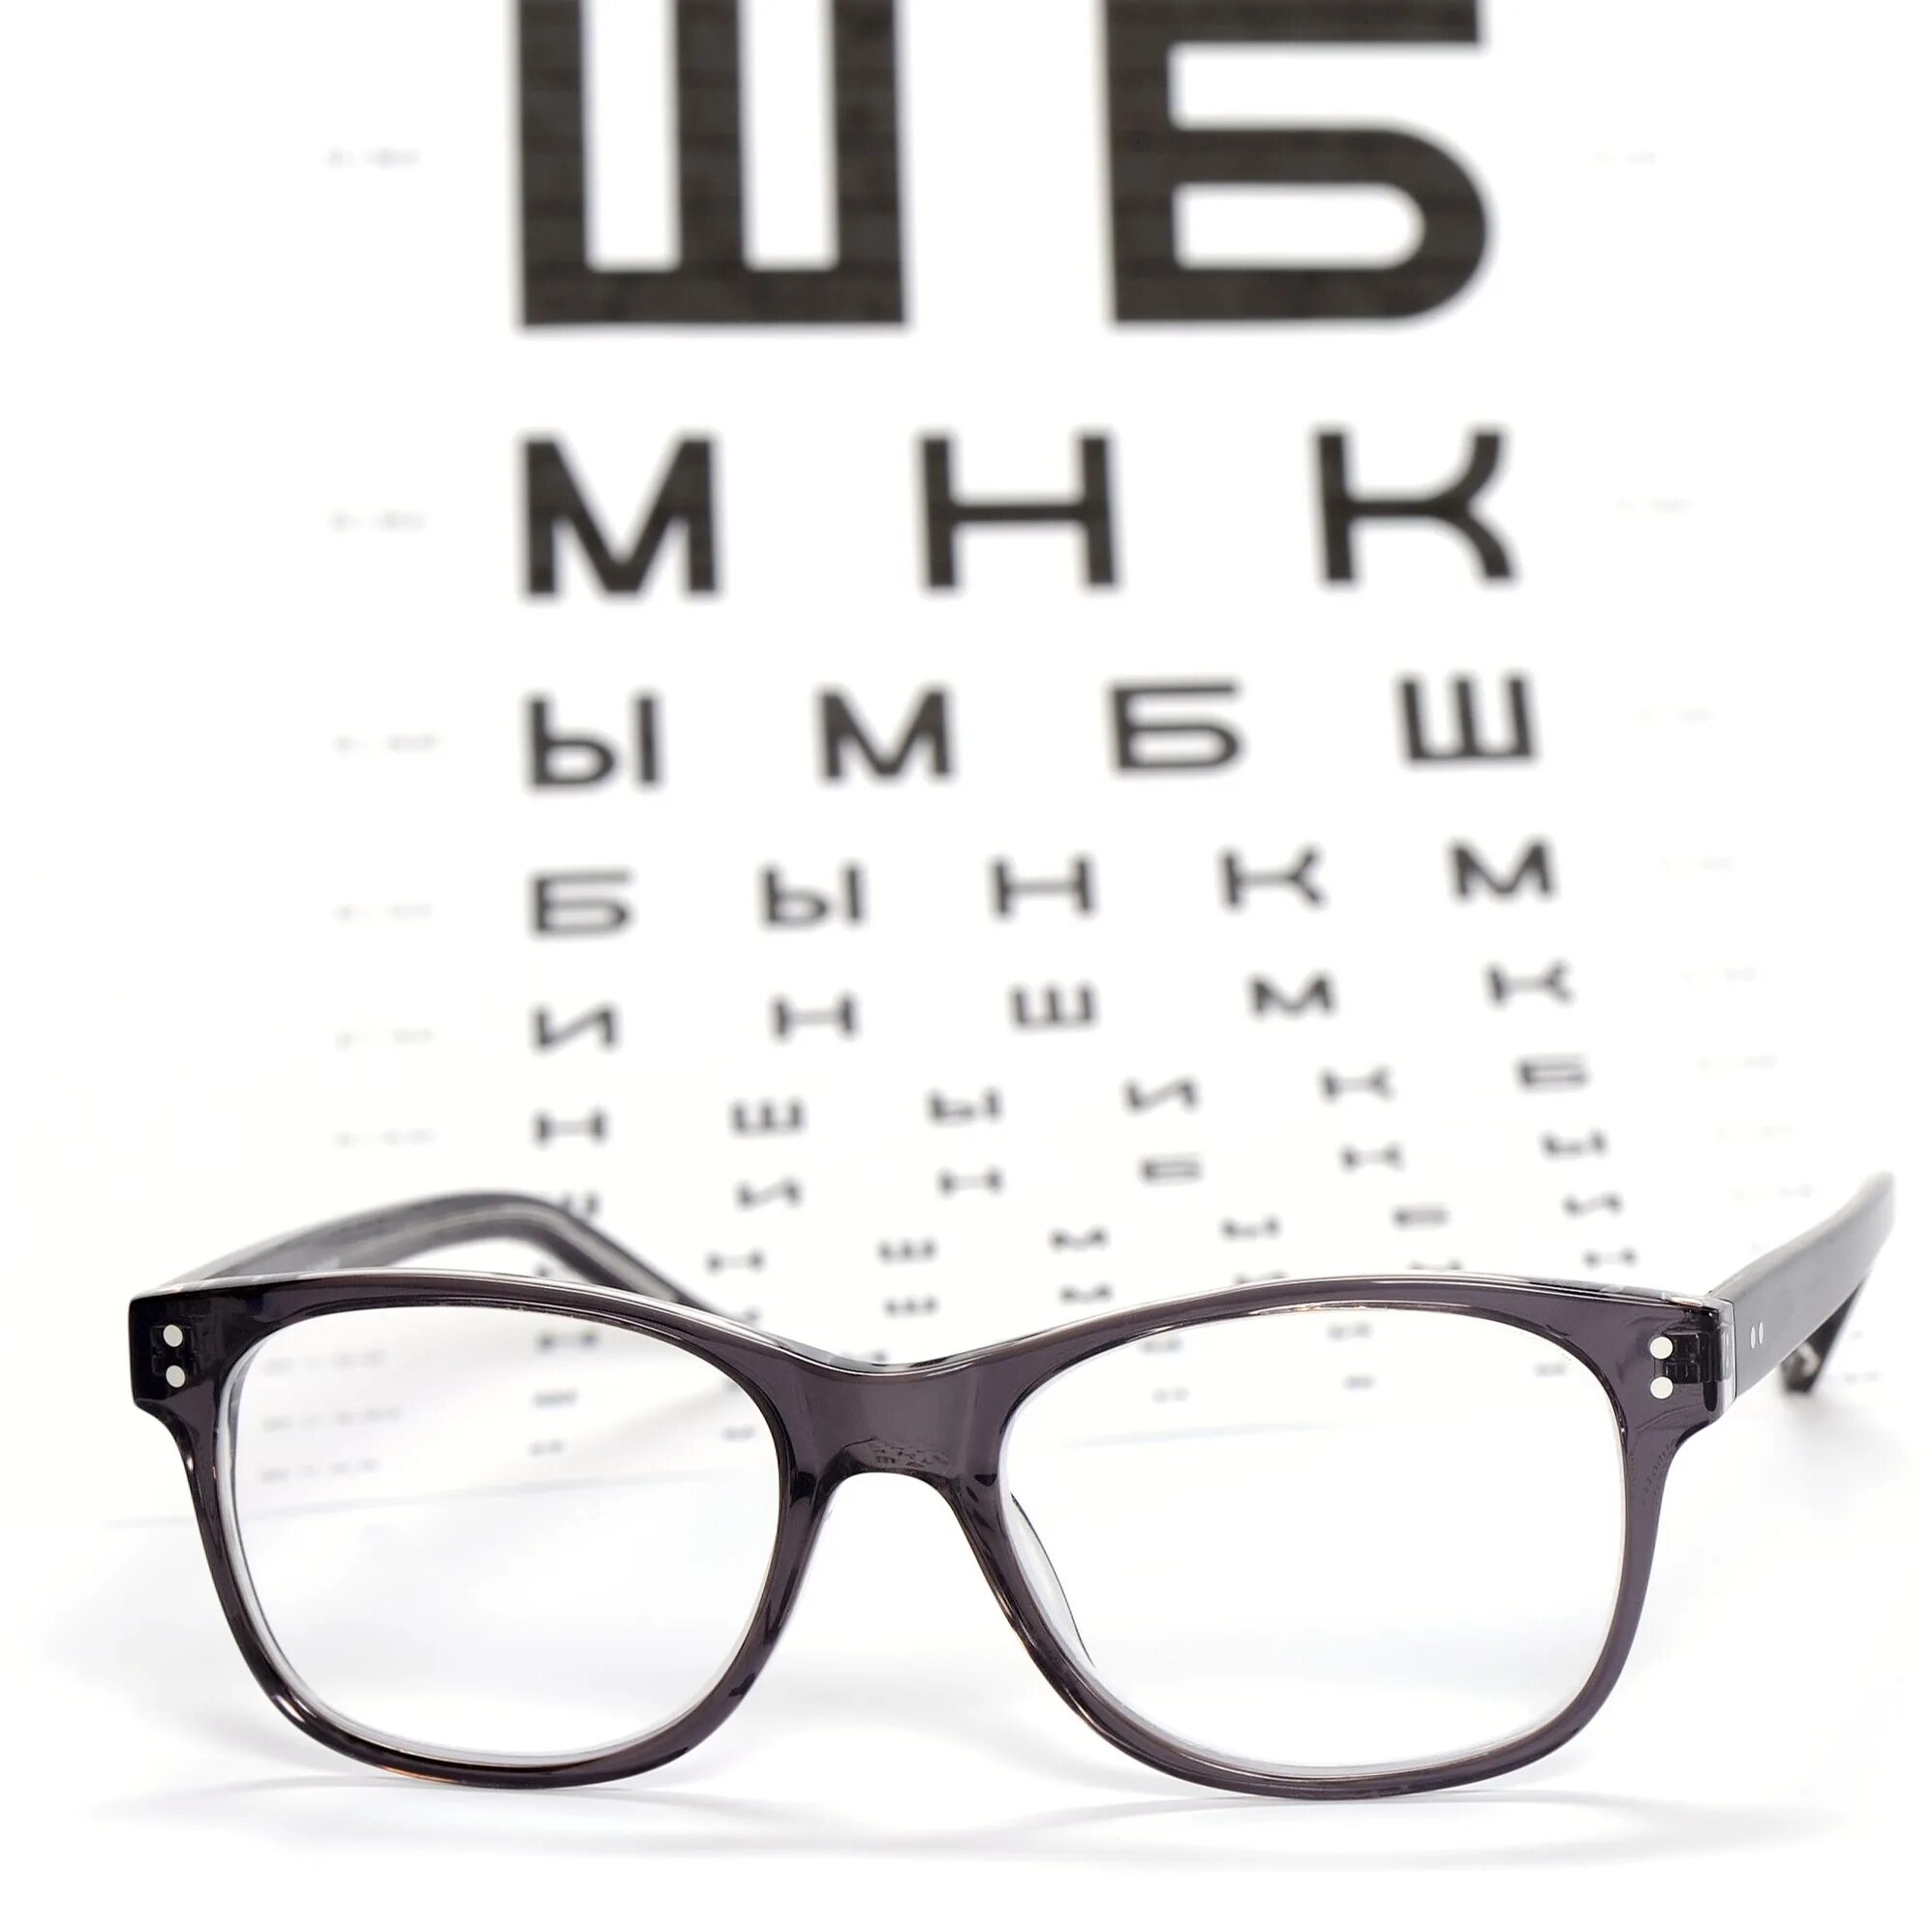 Очки офтальмолога. Оправа для проверки зрения. Оптика очки для проверки зрения. Очки для зрения окулист.